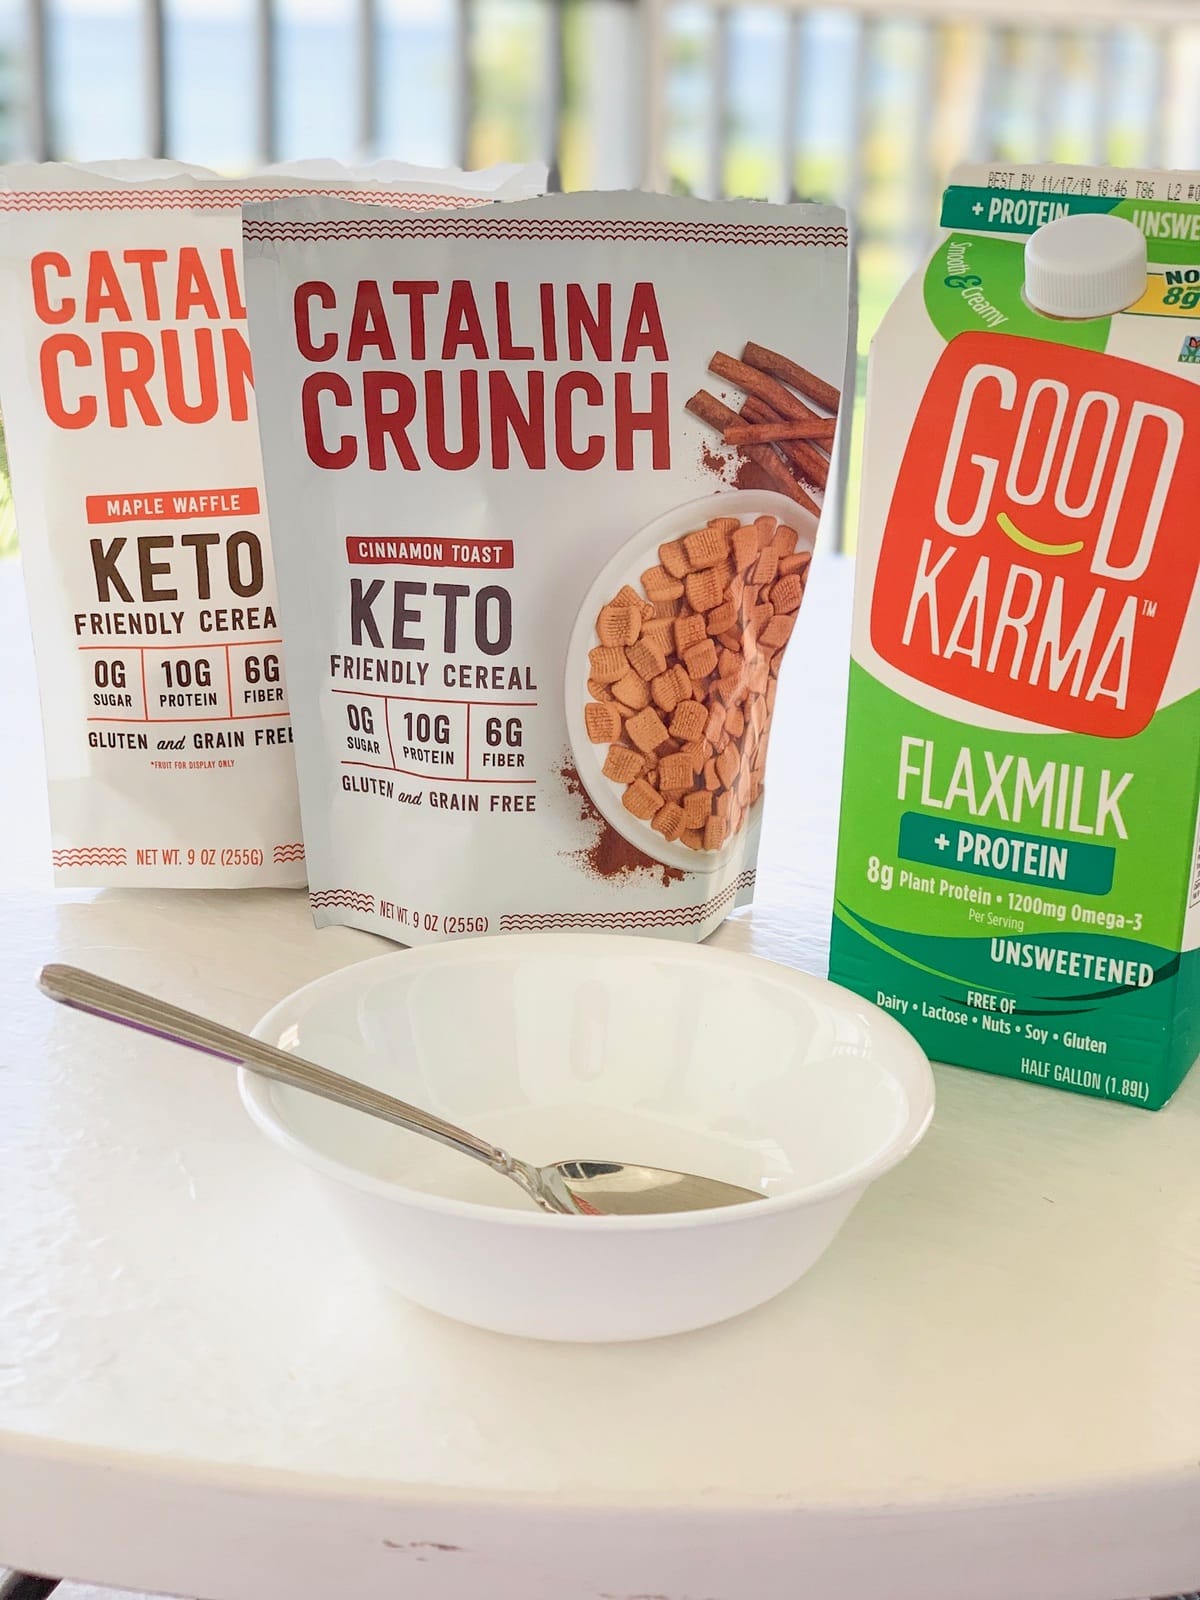 catalina crunch cereal on a table with good karma flaxmilk